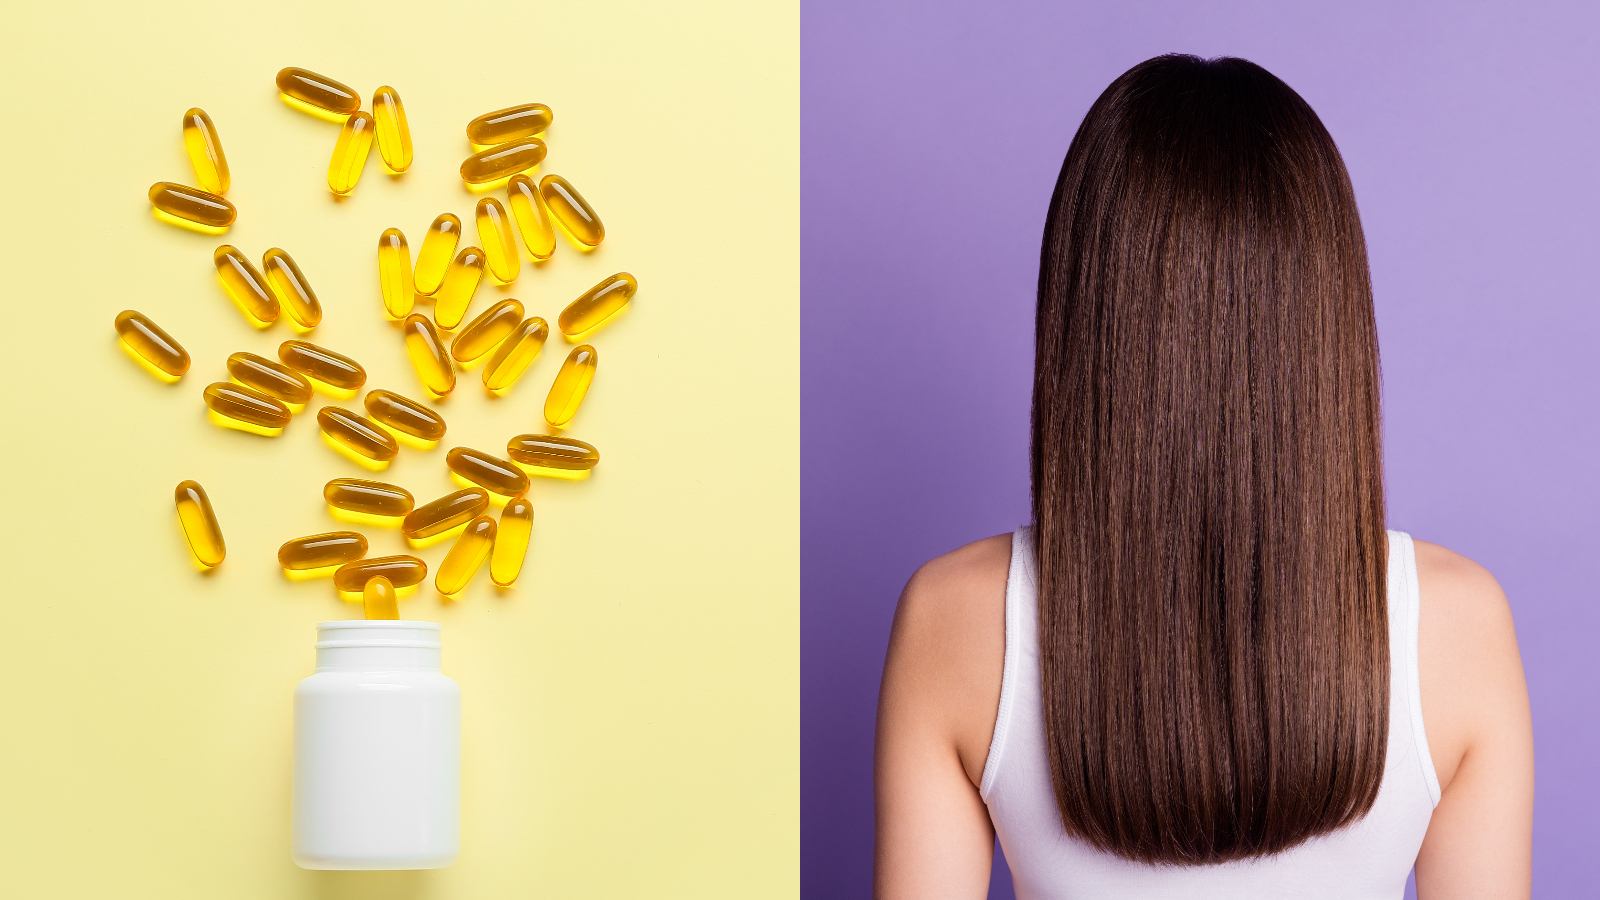 5 vitamin E capsules for hair